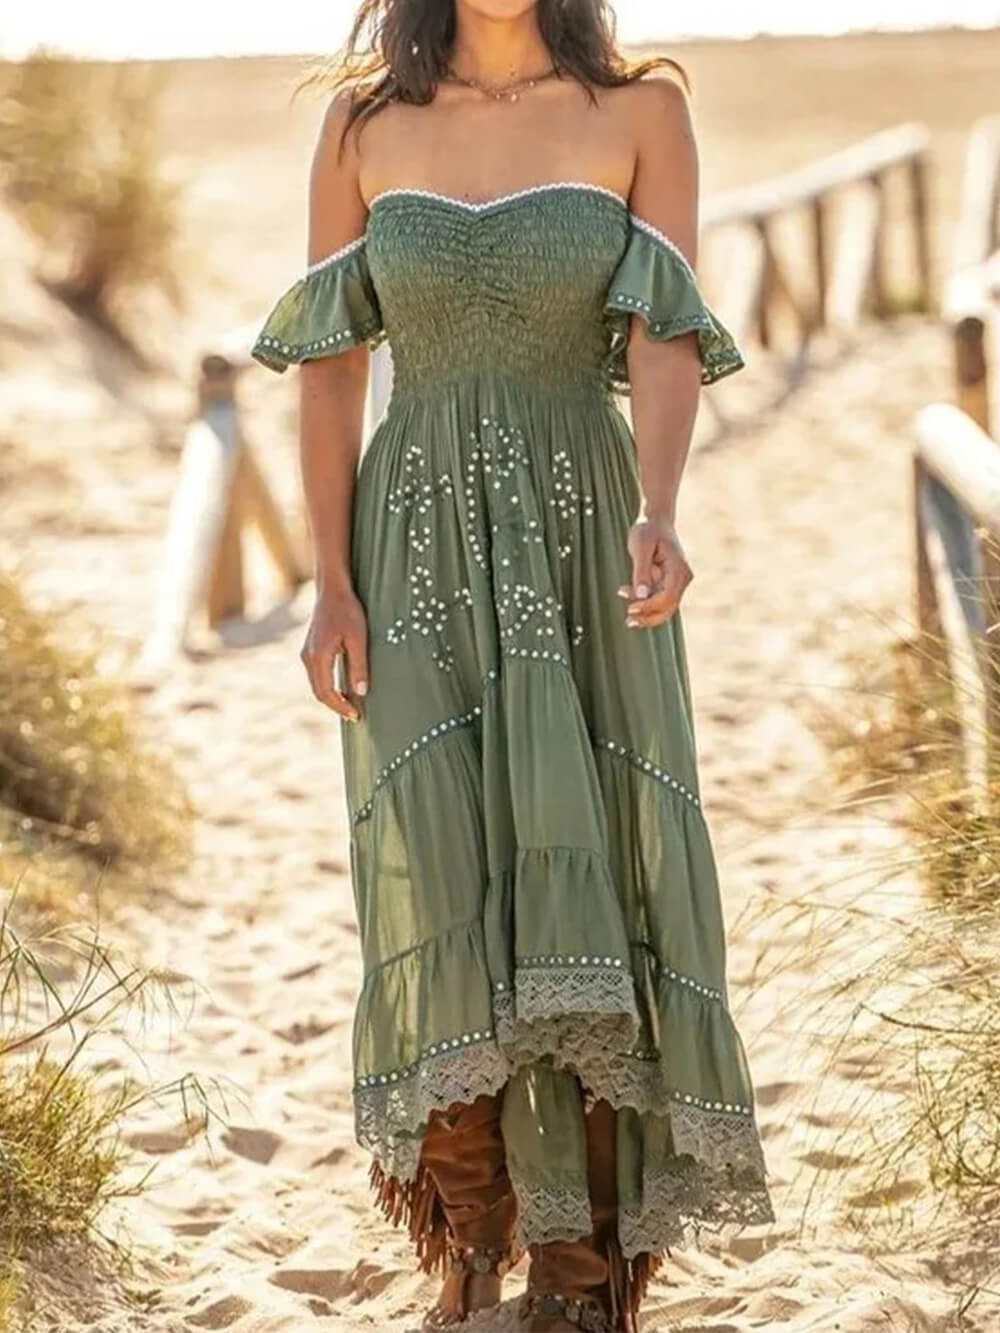 Bohemian One-Shoulder Lace Dress